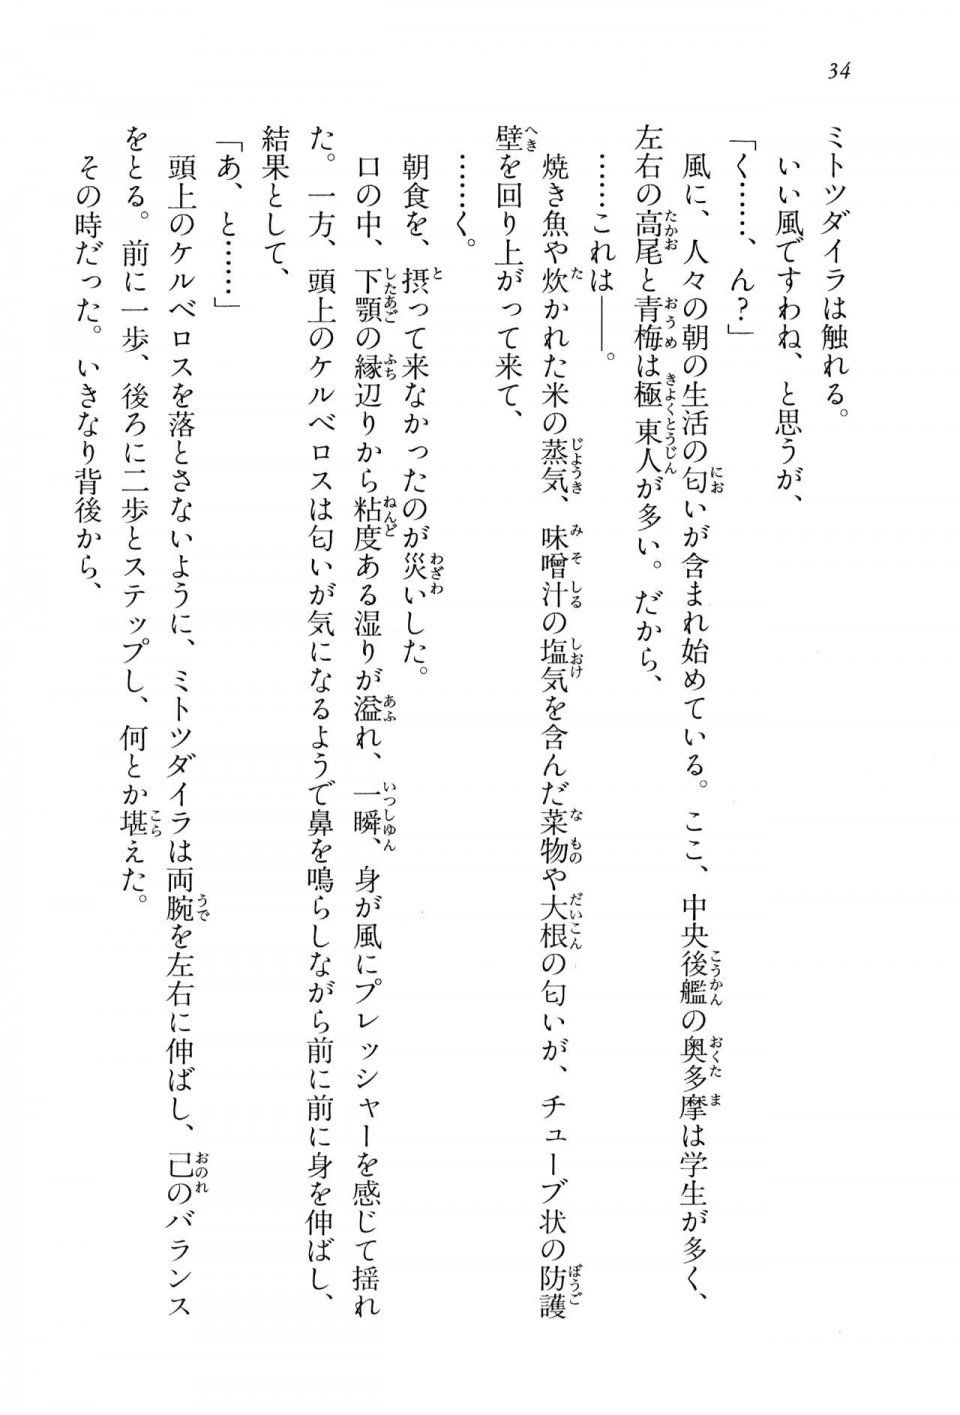 Kyoukai Senjou no Horizon BD Special Mininovel Vol 2(1B) - Photo #38